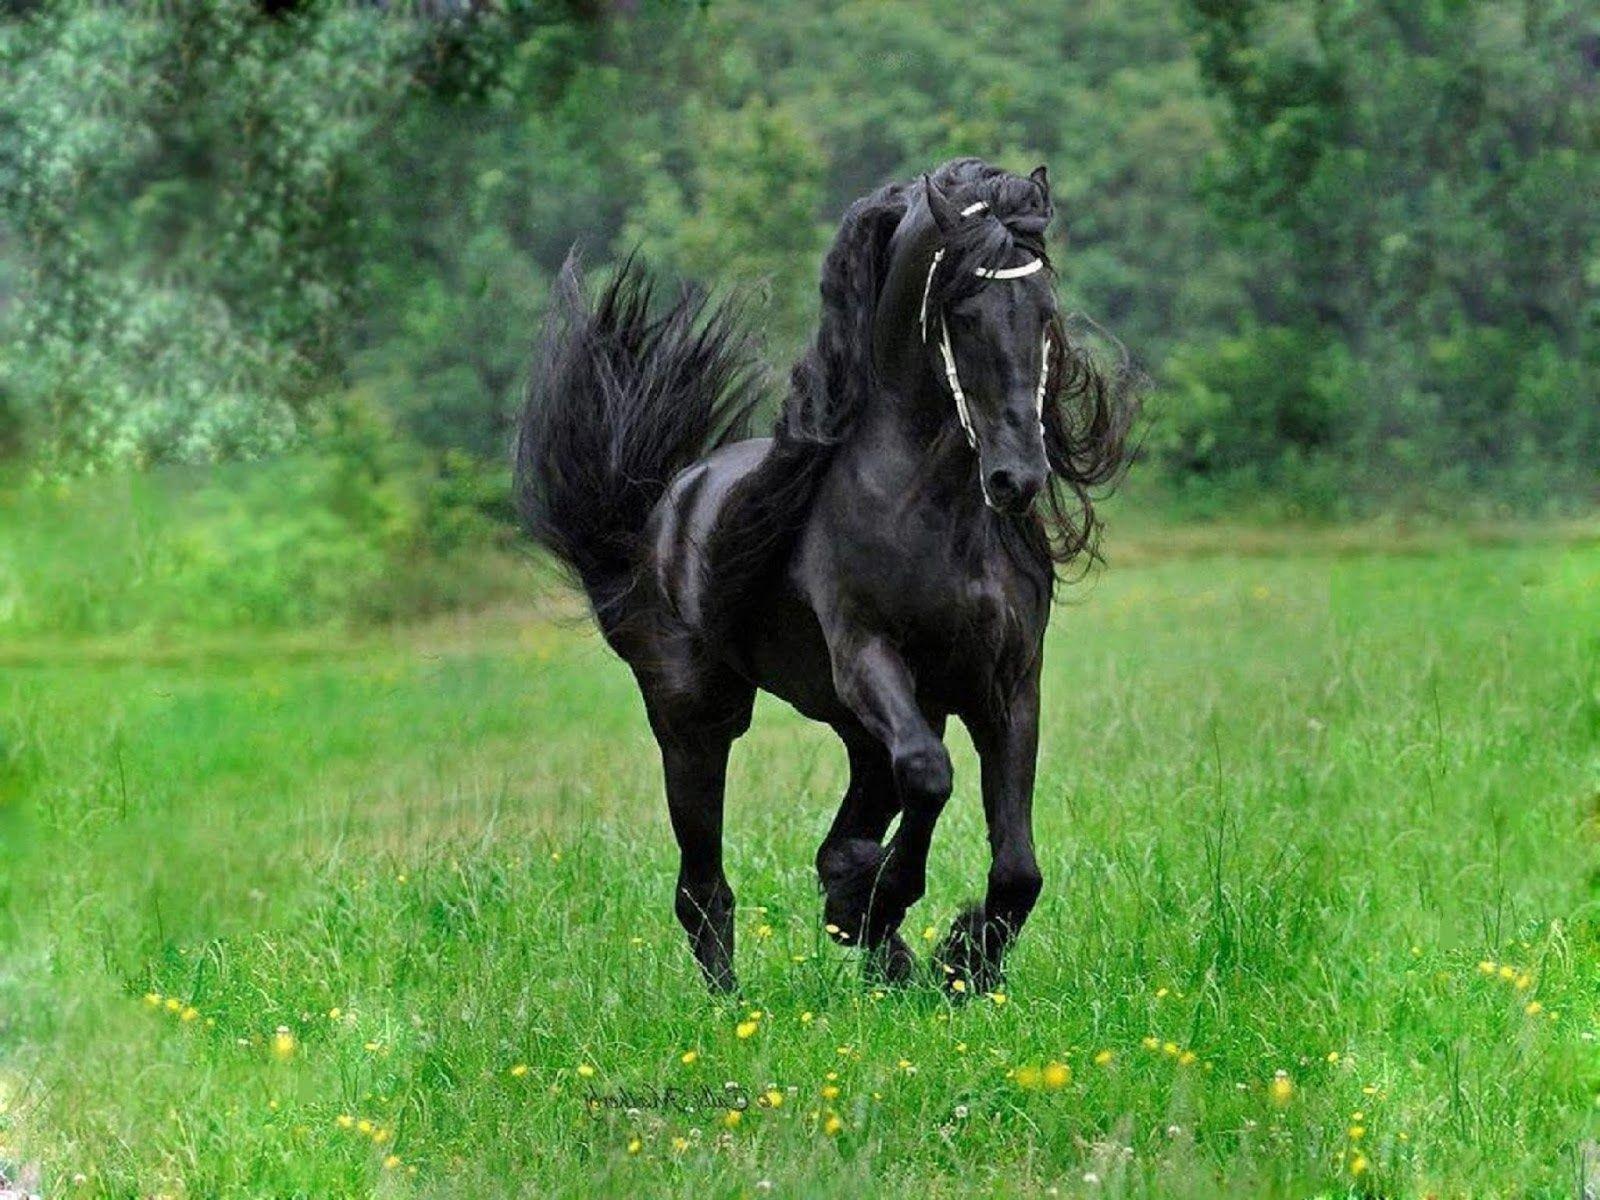 Black Horse Wallpaper. Polo Horses Wallpaper. Black Horse Image